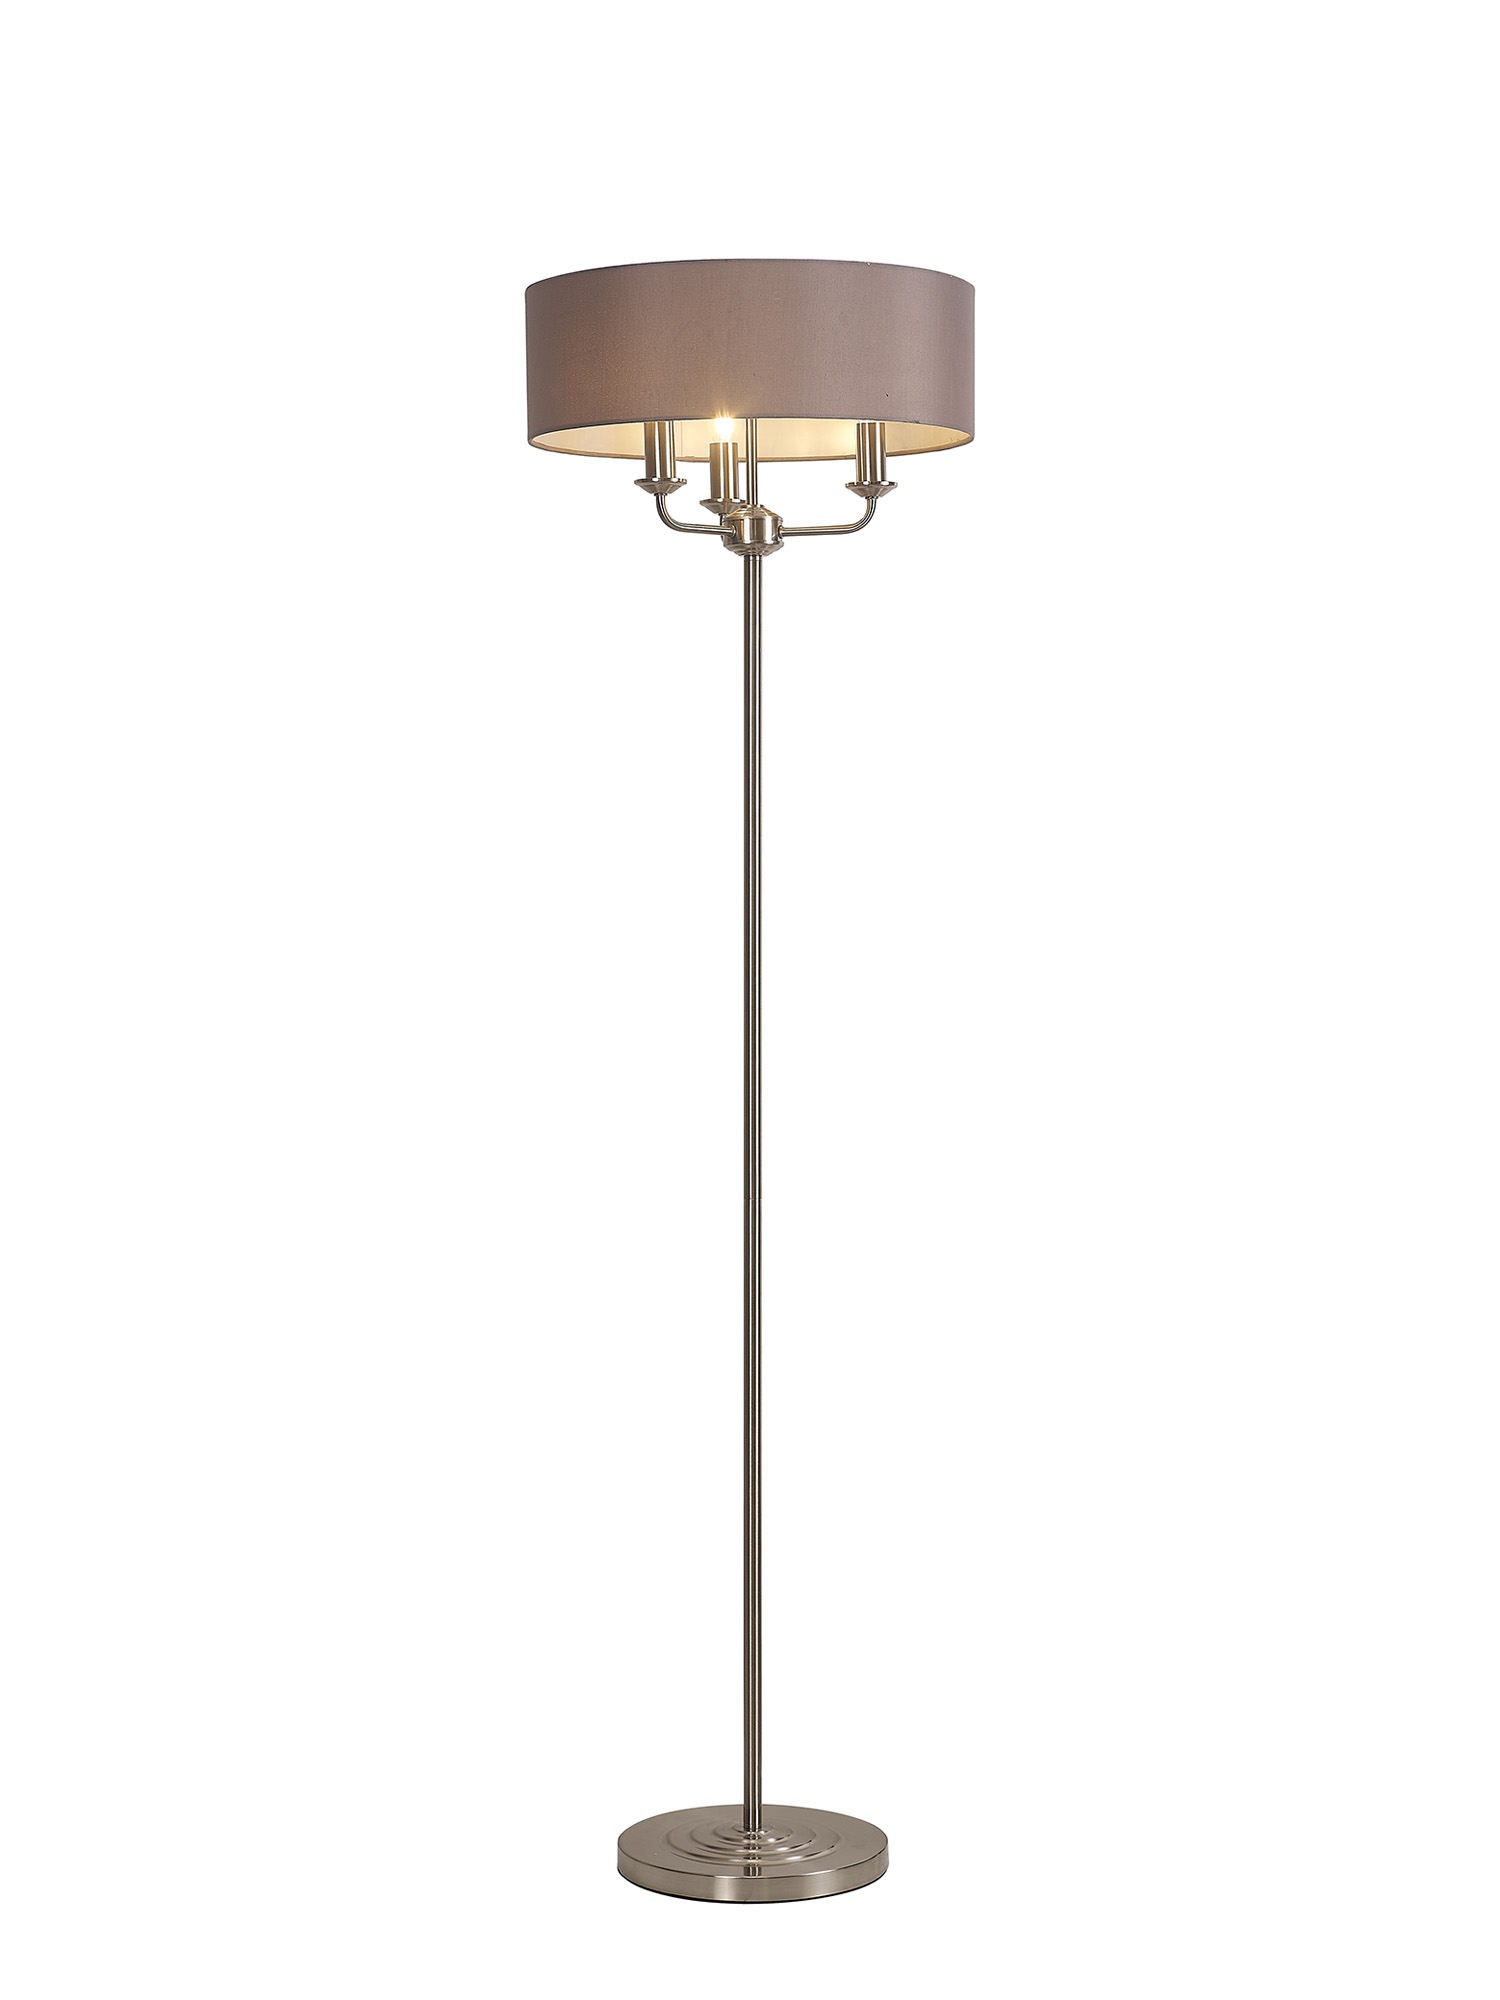 DK0922  Banyan 45cm 3 Light Floor Lamp Satin Nickel, Grey